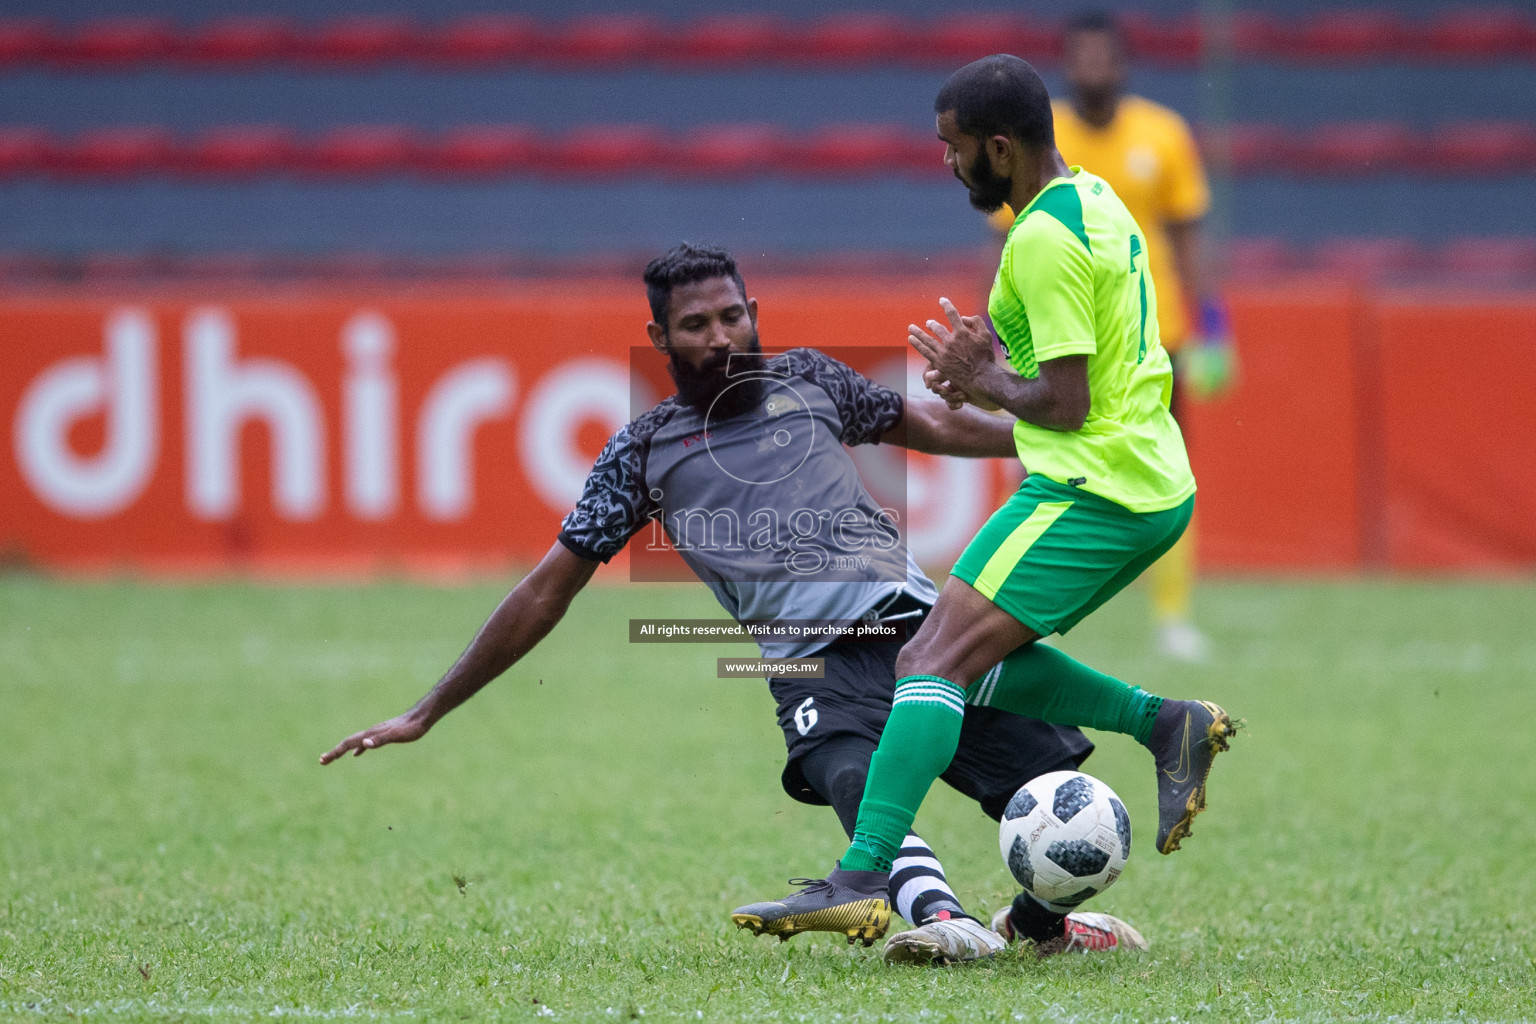 Maziya SRC vs Club Green Streets in Dhiraagu Dhivehi Premier League 2019 held in Male', Maldives on 19th June. Photos: Suadh Abdul Sattar/images.mv